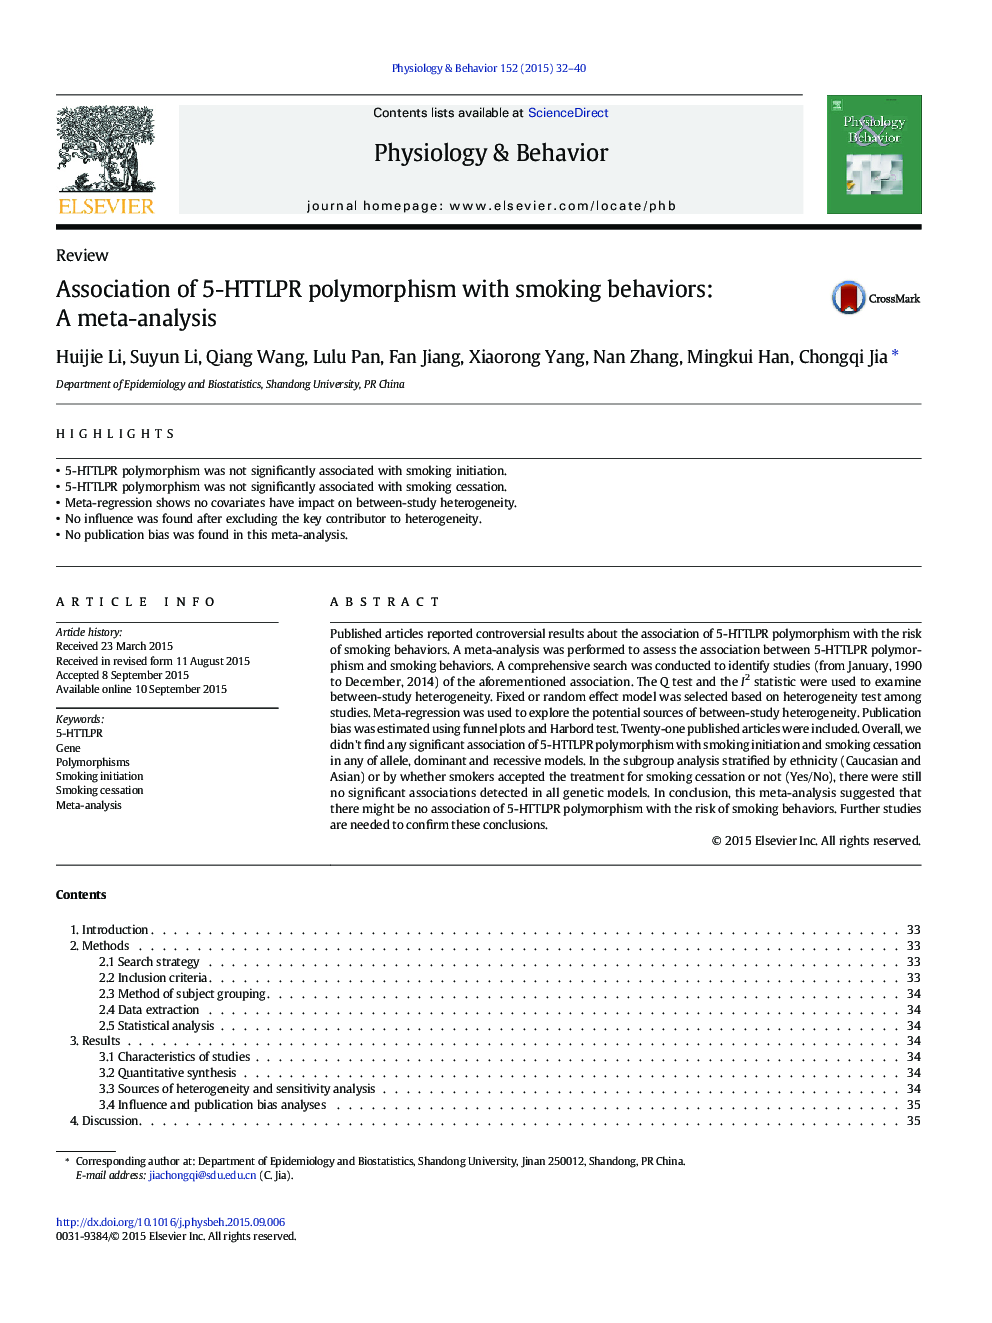 ReviewAssociation of 5-HTTLPR polymorphism with smoking behaviors: A meta-analysis